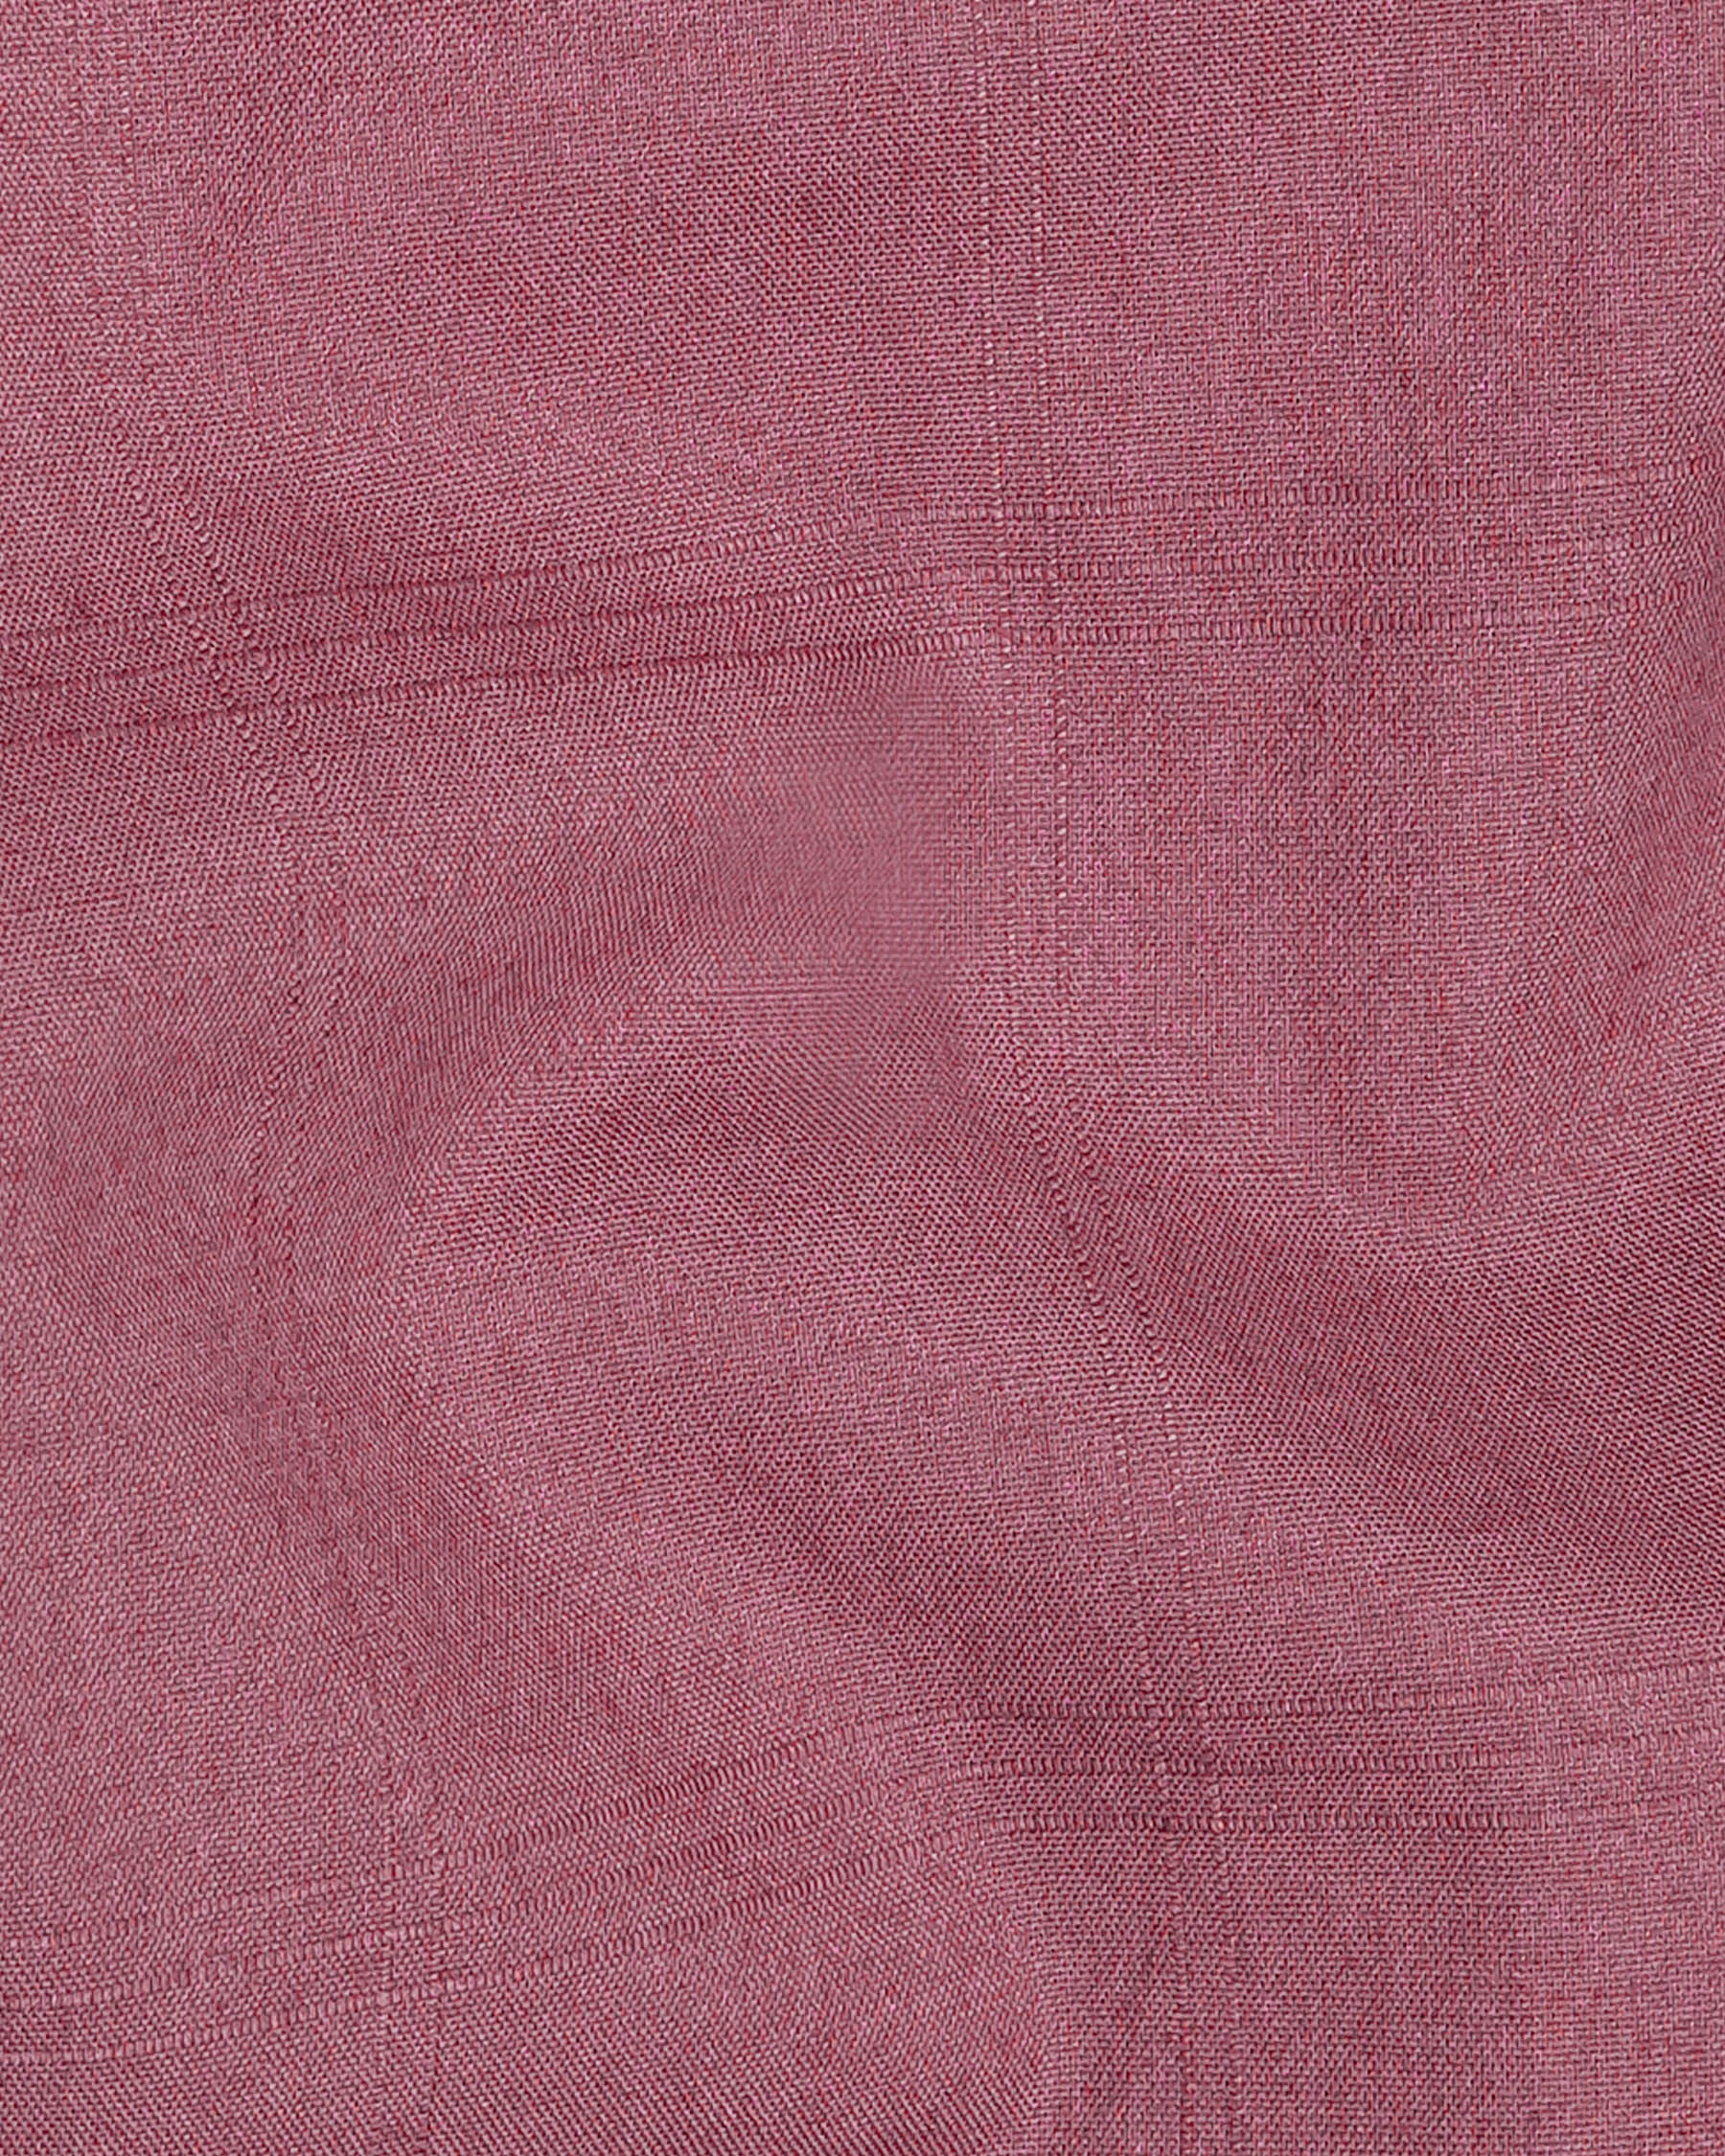 Tapestry Pink Subtle Striped Dobby Textured Premium Giza Cotton Shirt 7937-BLE-38, 7937-BLE-H-38, 7937-BLE-39, 7937-BLE-H-39, 7937-BLE-40, 7937-BLE-H-40, 7937-BLE-42, 7937-BLE-H-42, 7937-BLE-44, 7937-BLE-H-44, 7937-BLE-46, 7937-BLE-H-46, 7937-BLE-48, 7937-BLE-H-48, 7937-BLE-50, 7937-BLE-H-50, 7937-BLE-52, 7937-BLE-H-52